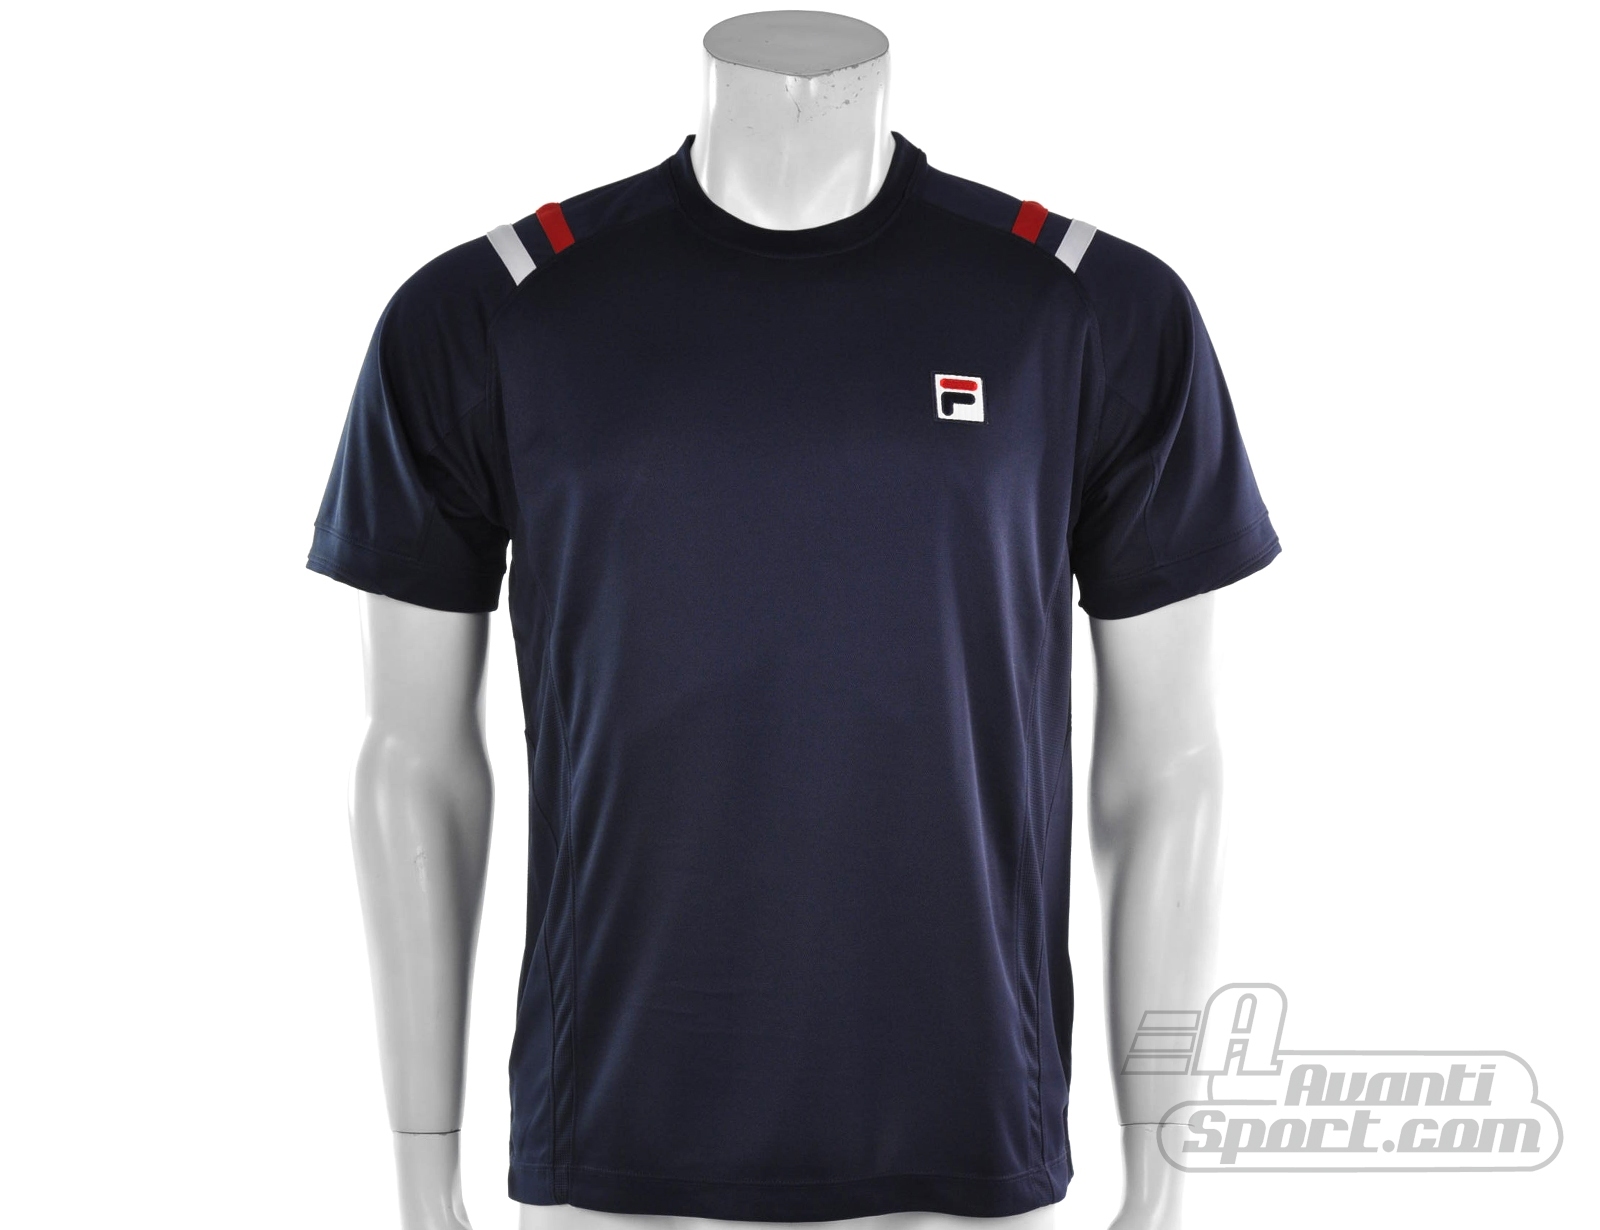 Avantisport - Fila - Open - Tennisshirt